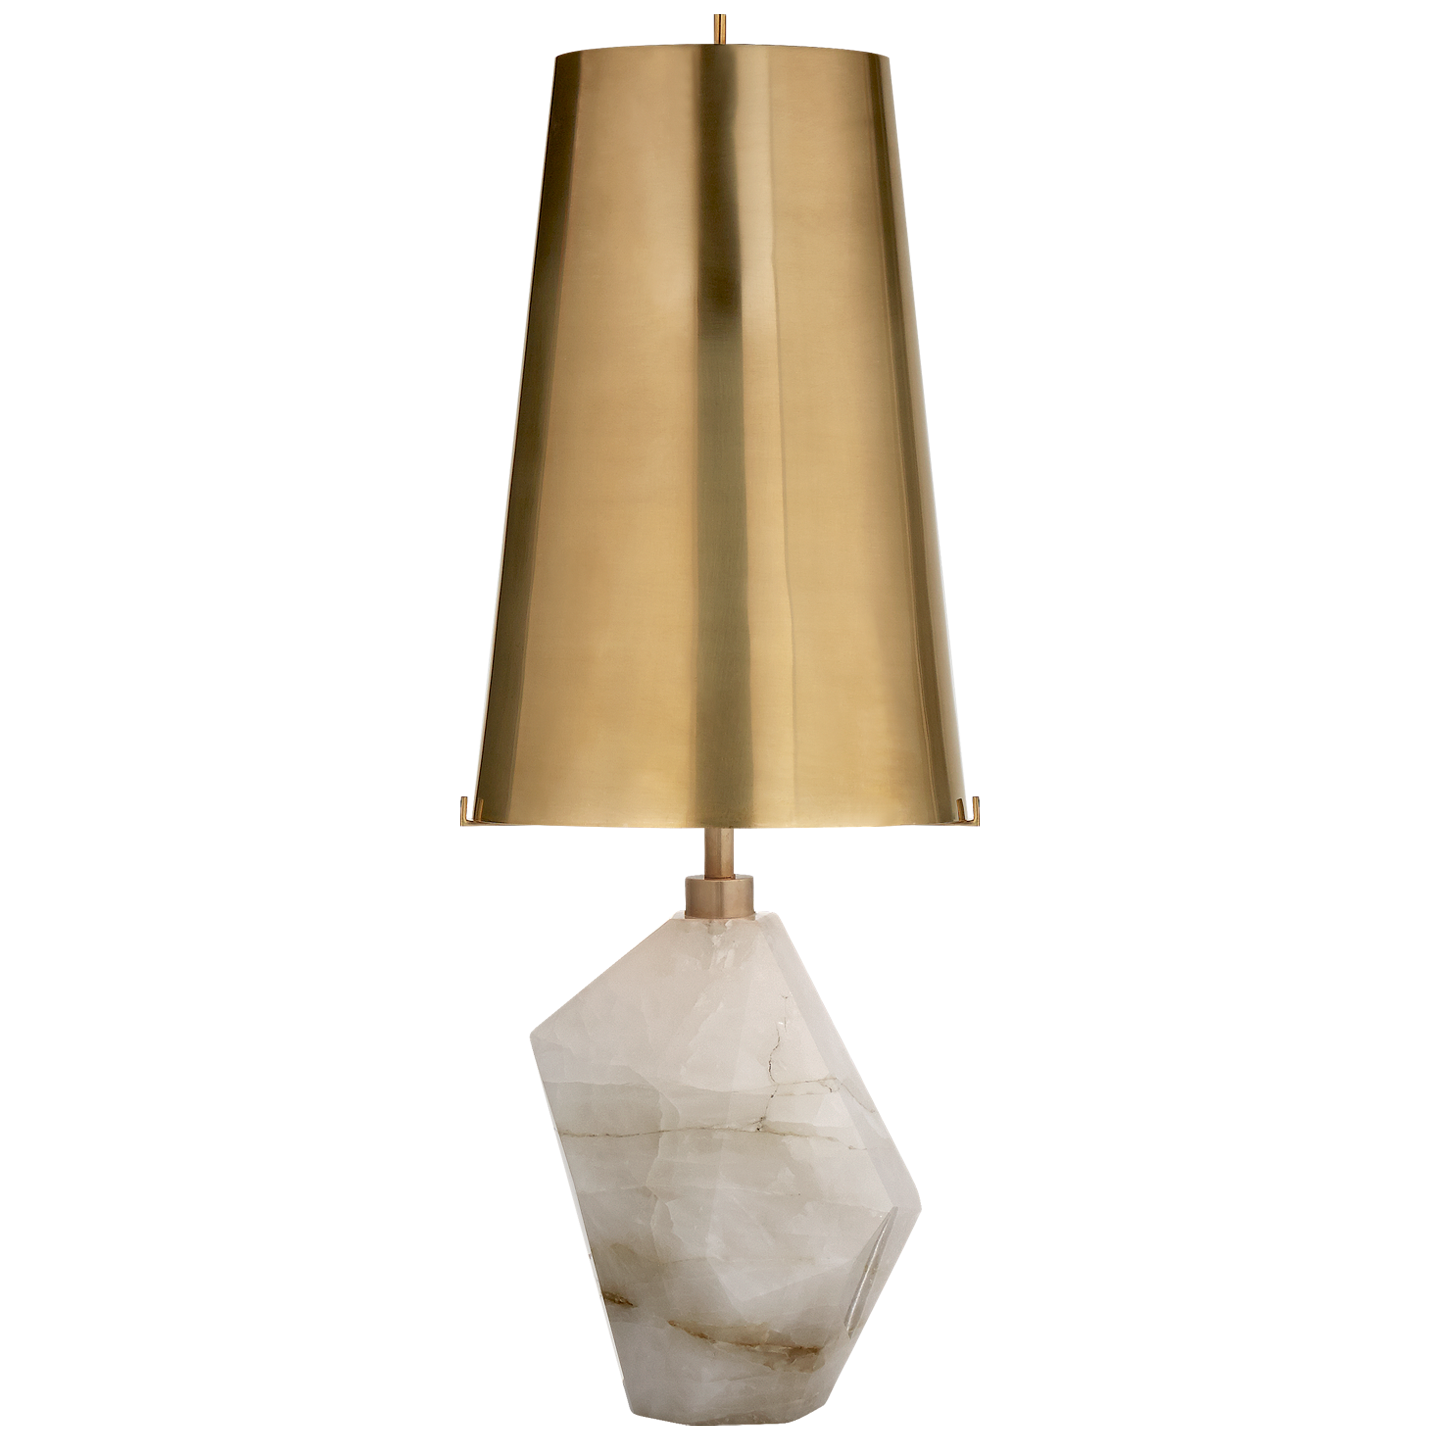 Halcyon Table Lamp - Quartz and Brass